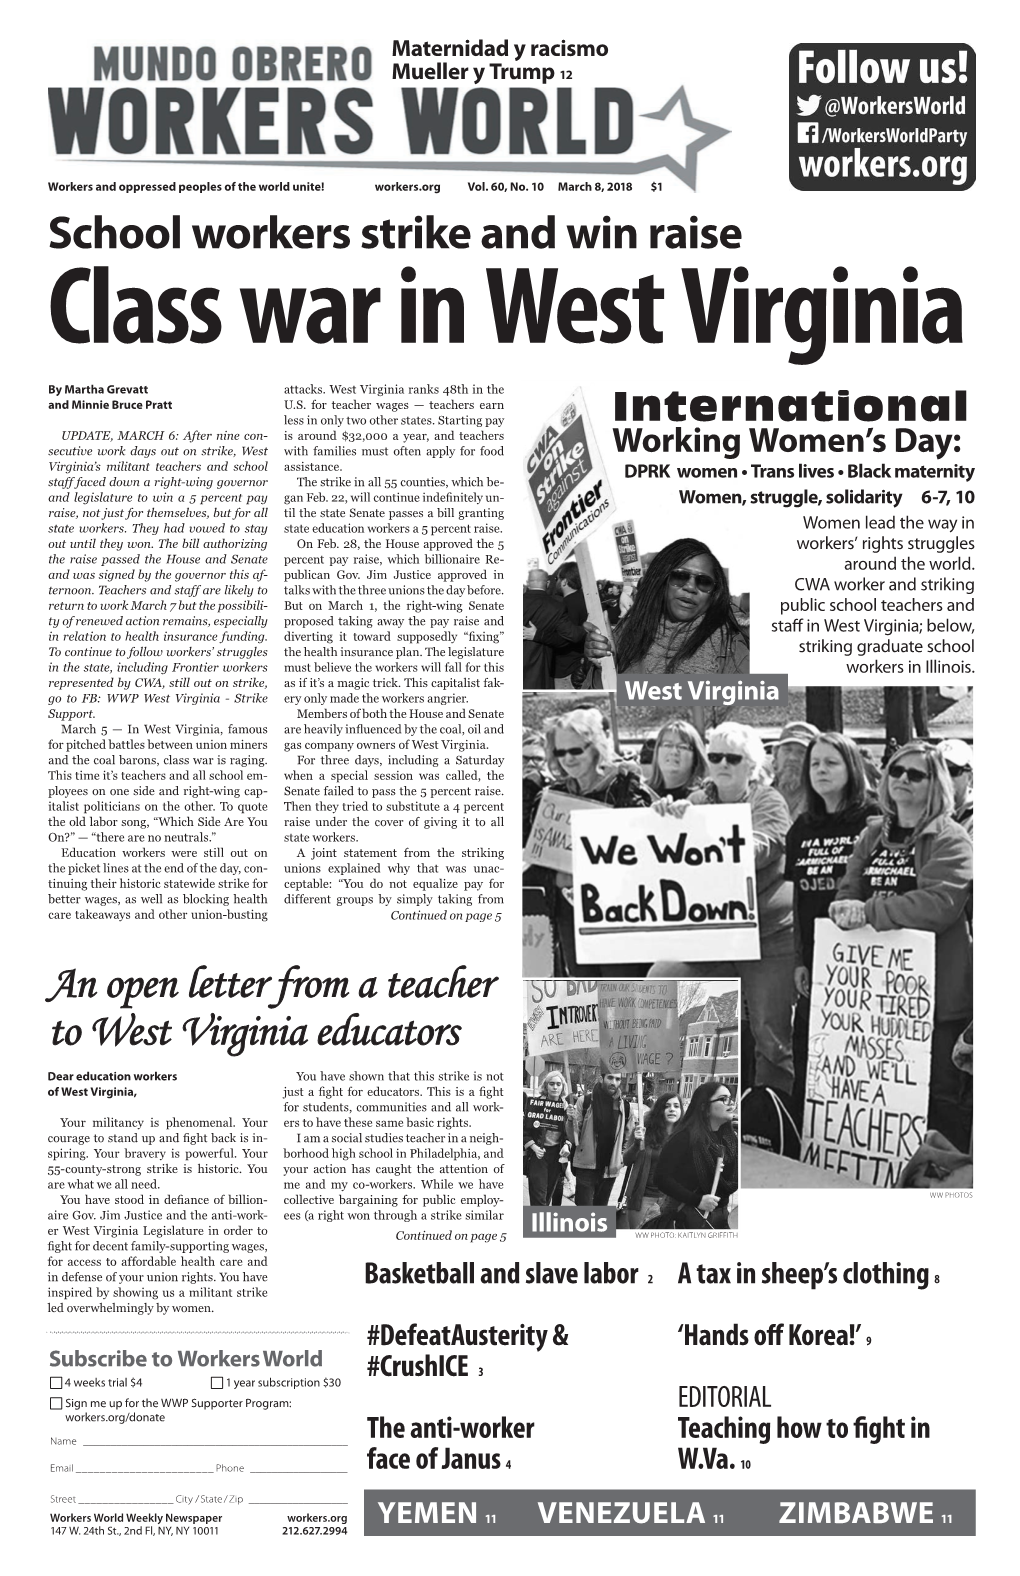 School Workers Strike and Win Raise Class War in West Virginia